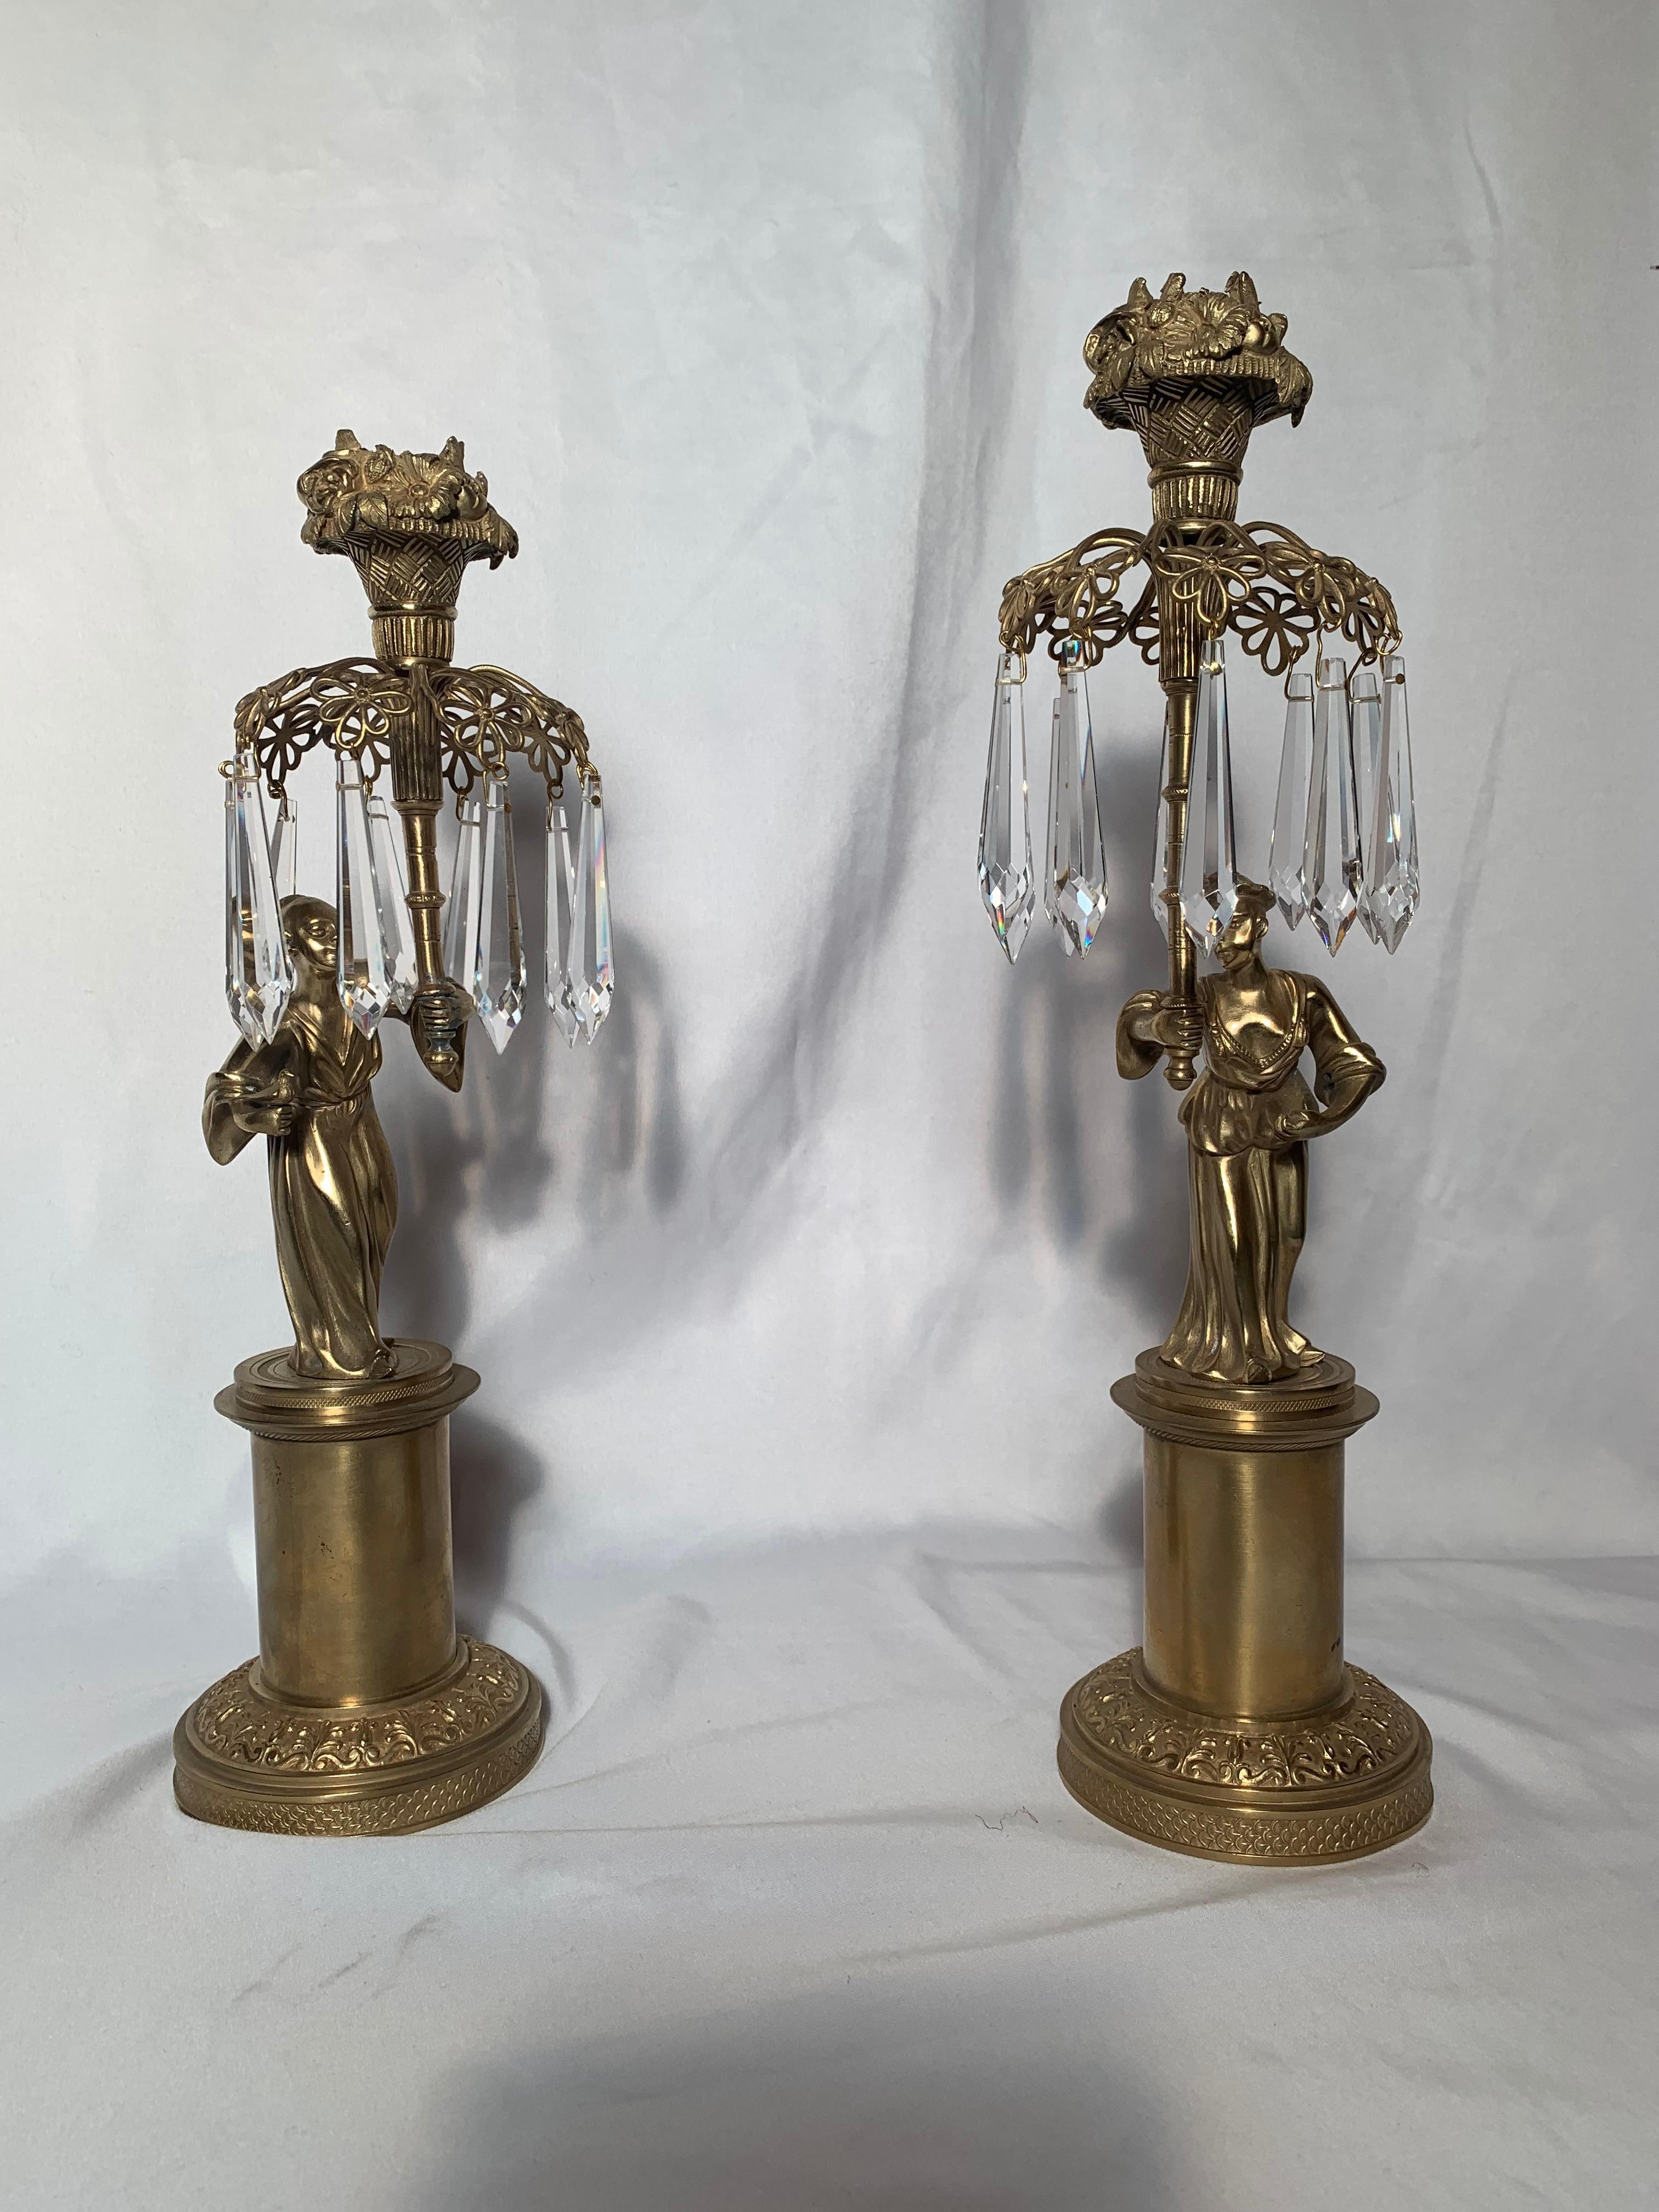 Pair of antique chinoiserie figurine candlesticks, circa 1865-1875.

       